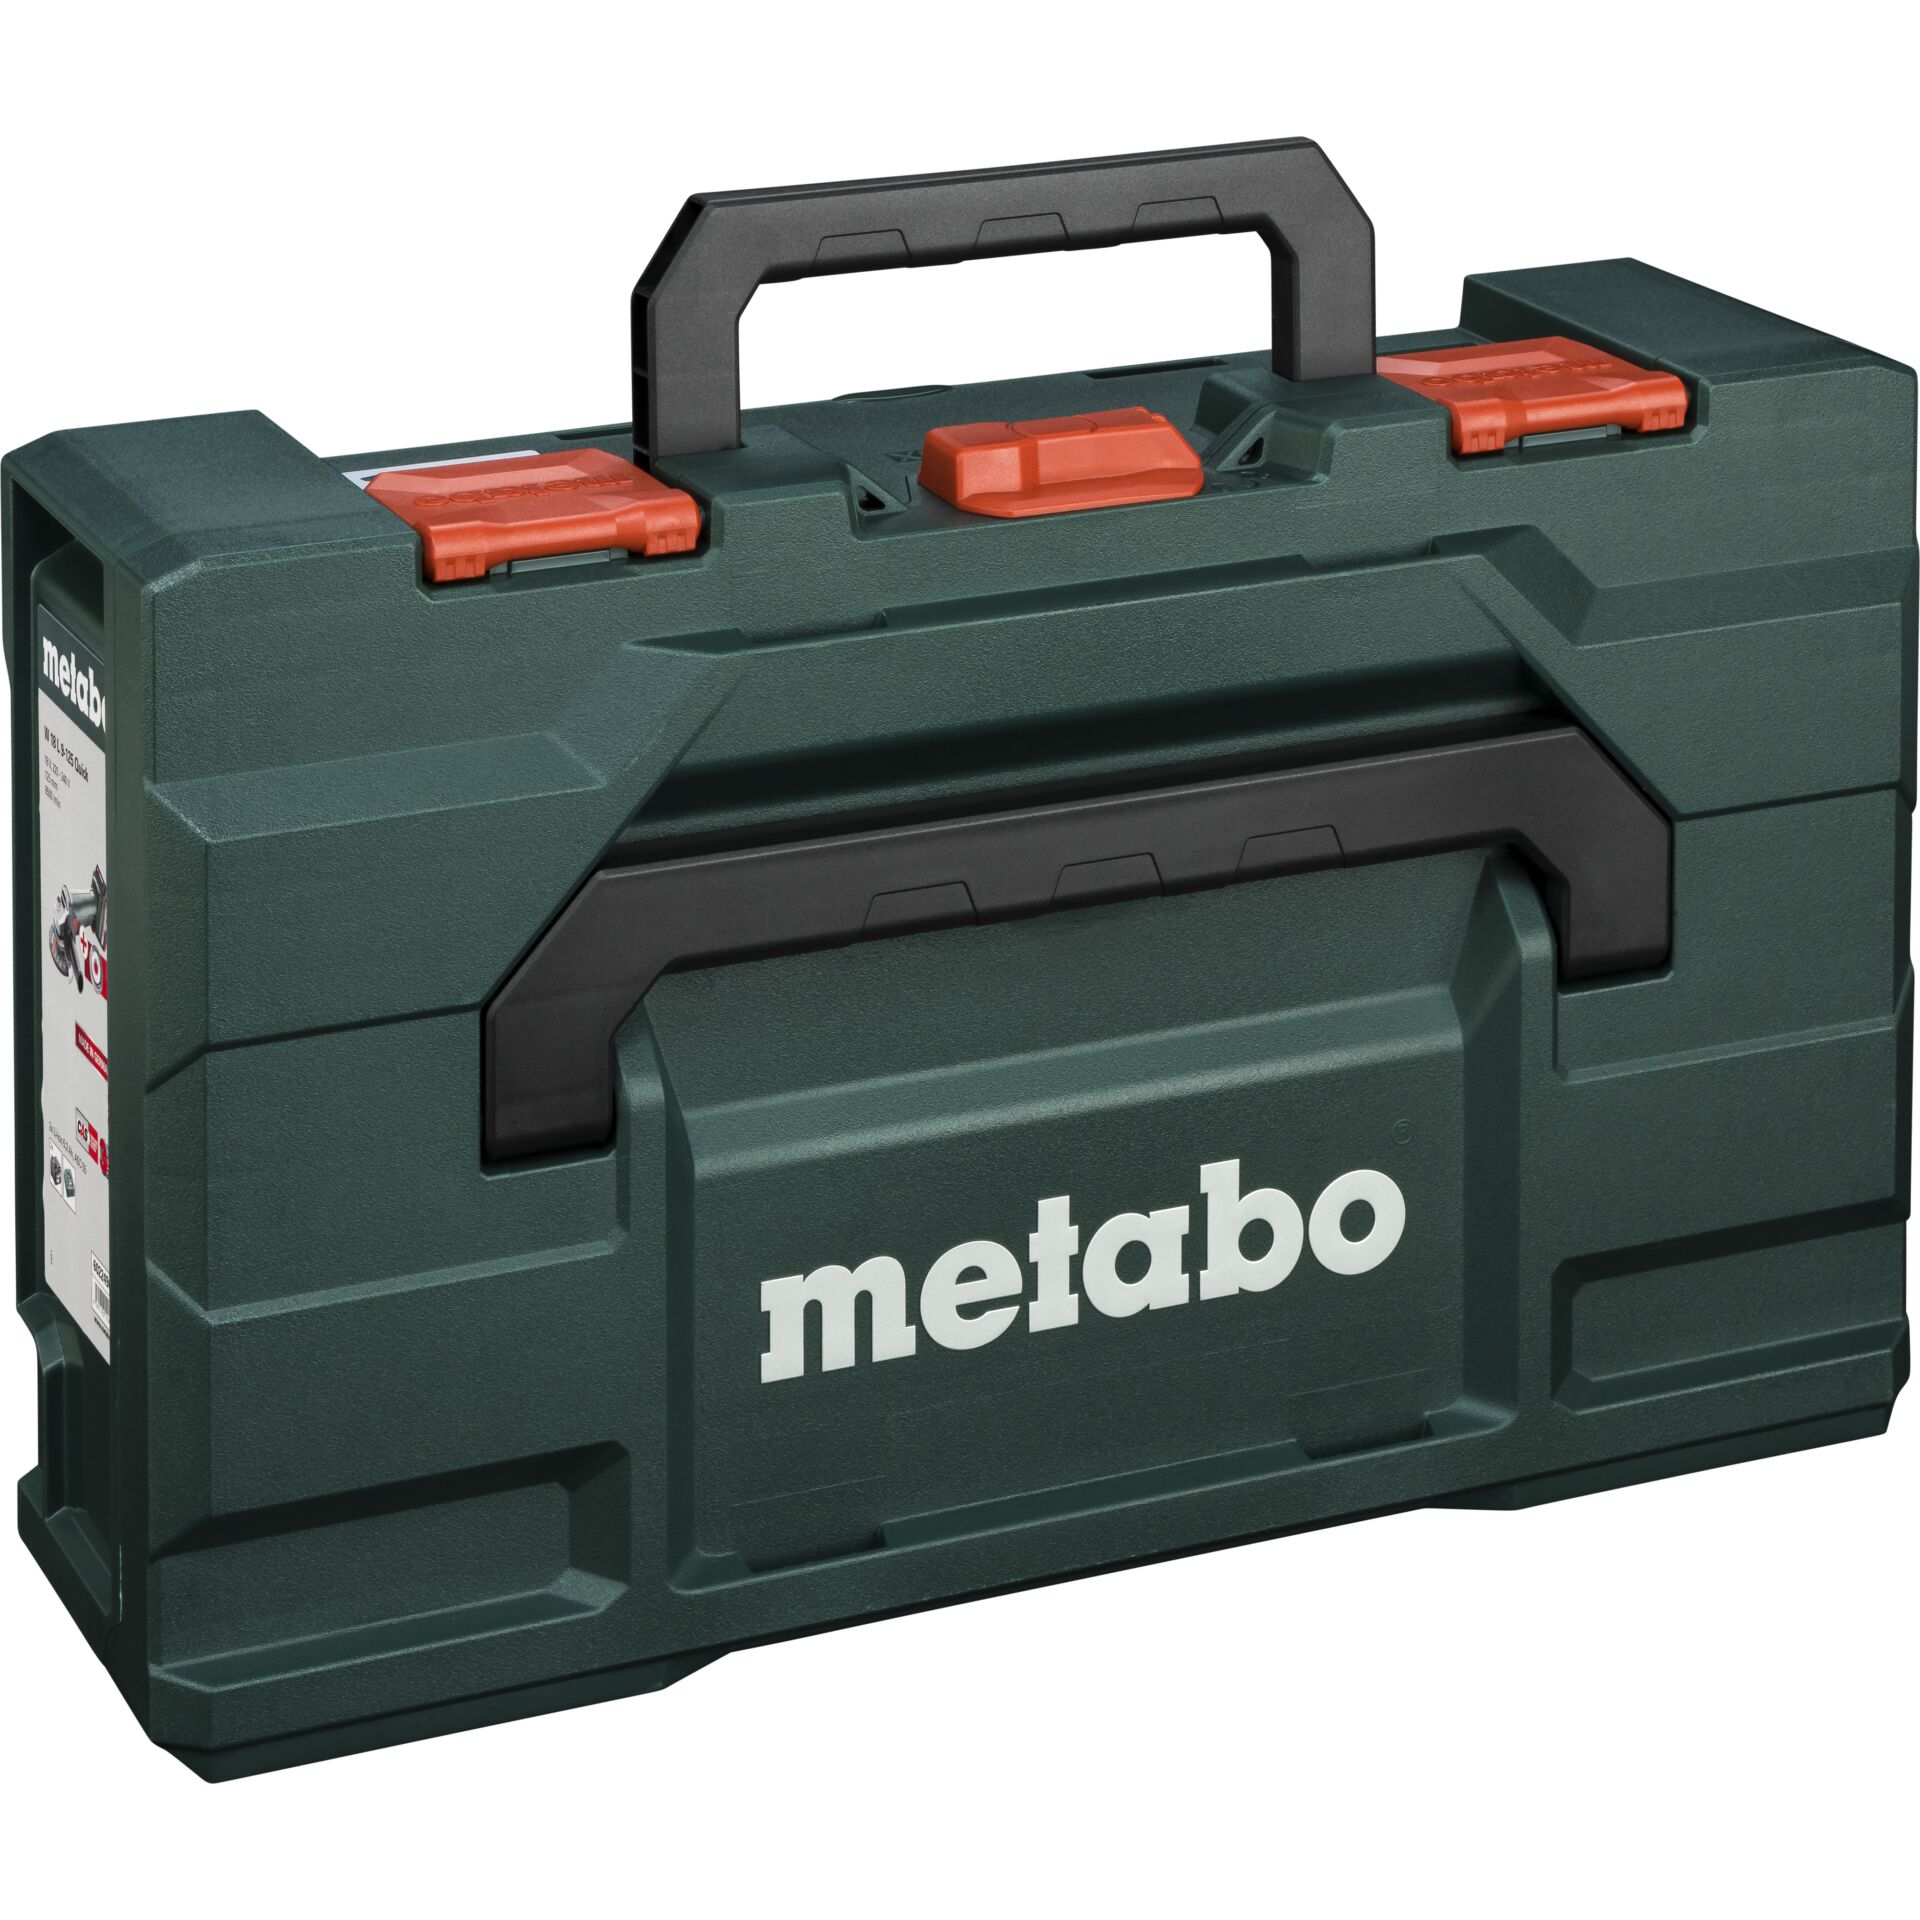 Metabo -602249650 L 9-125 Quick -Metabo W 18 (602249650) Hardware/Electronic